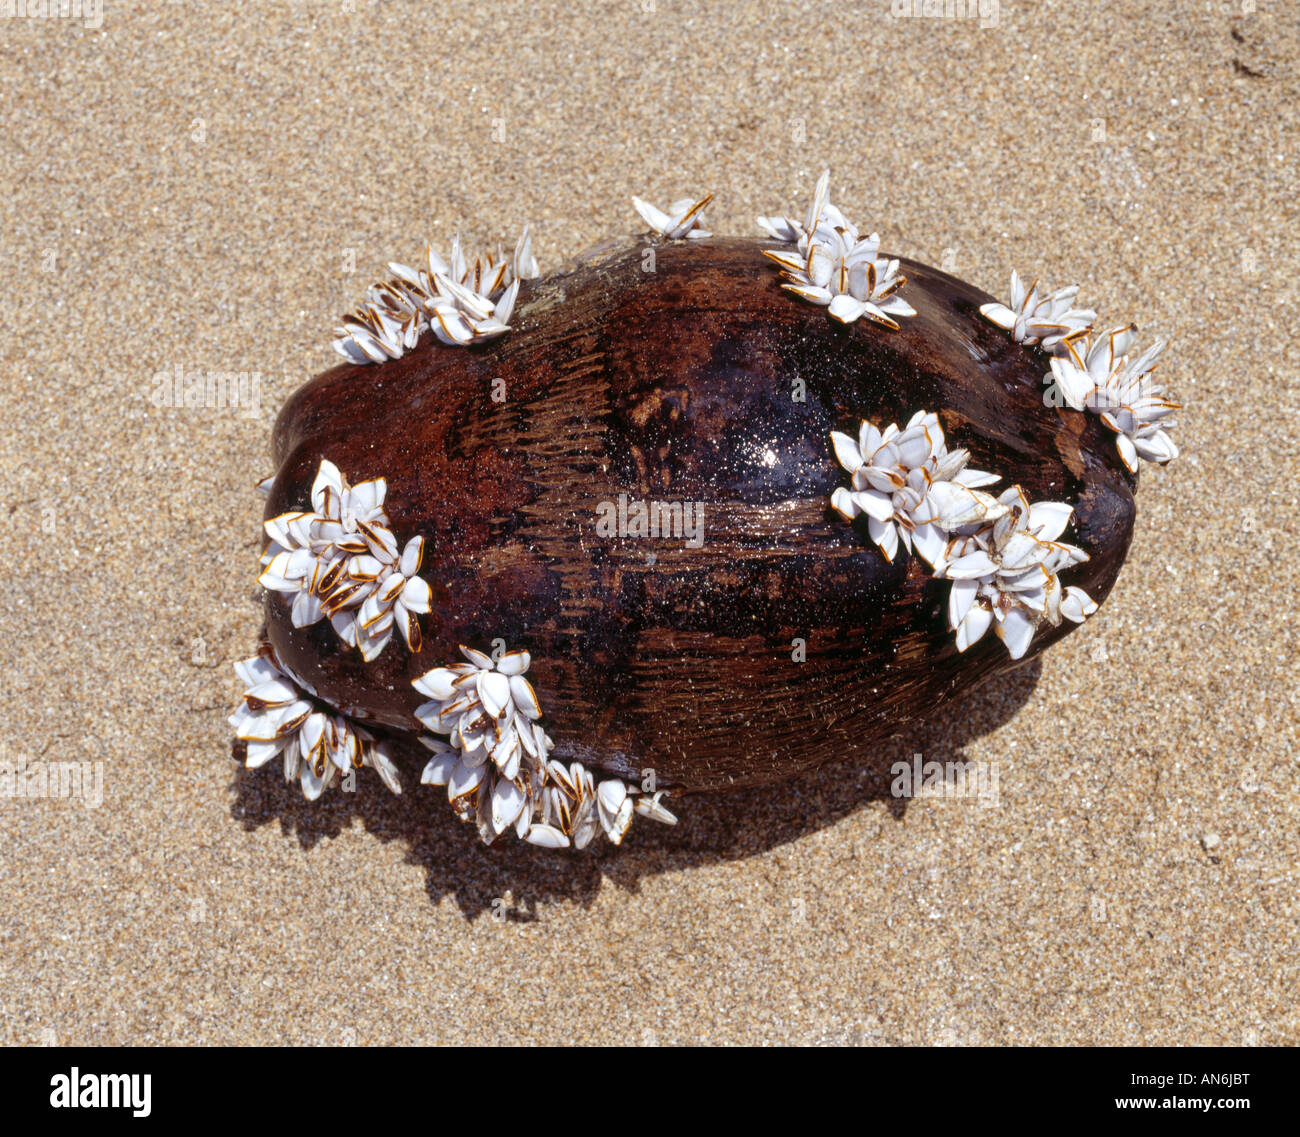 Kokosnuss am Strand mit Muscheln bewachsen coconut overgrown with shells on the beach Thailand Stock Photo